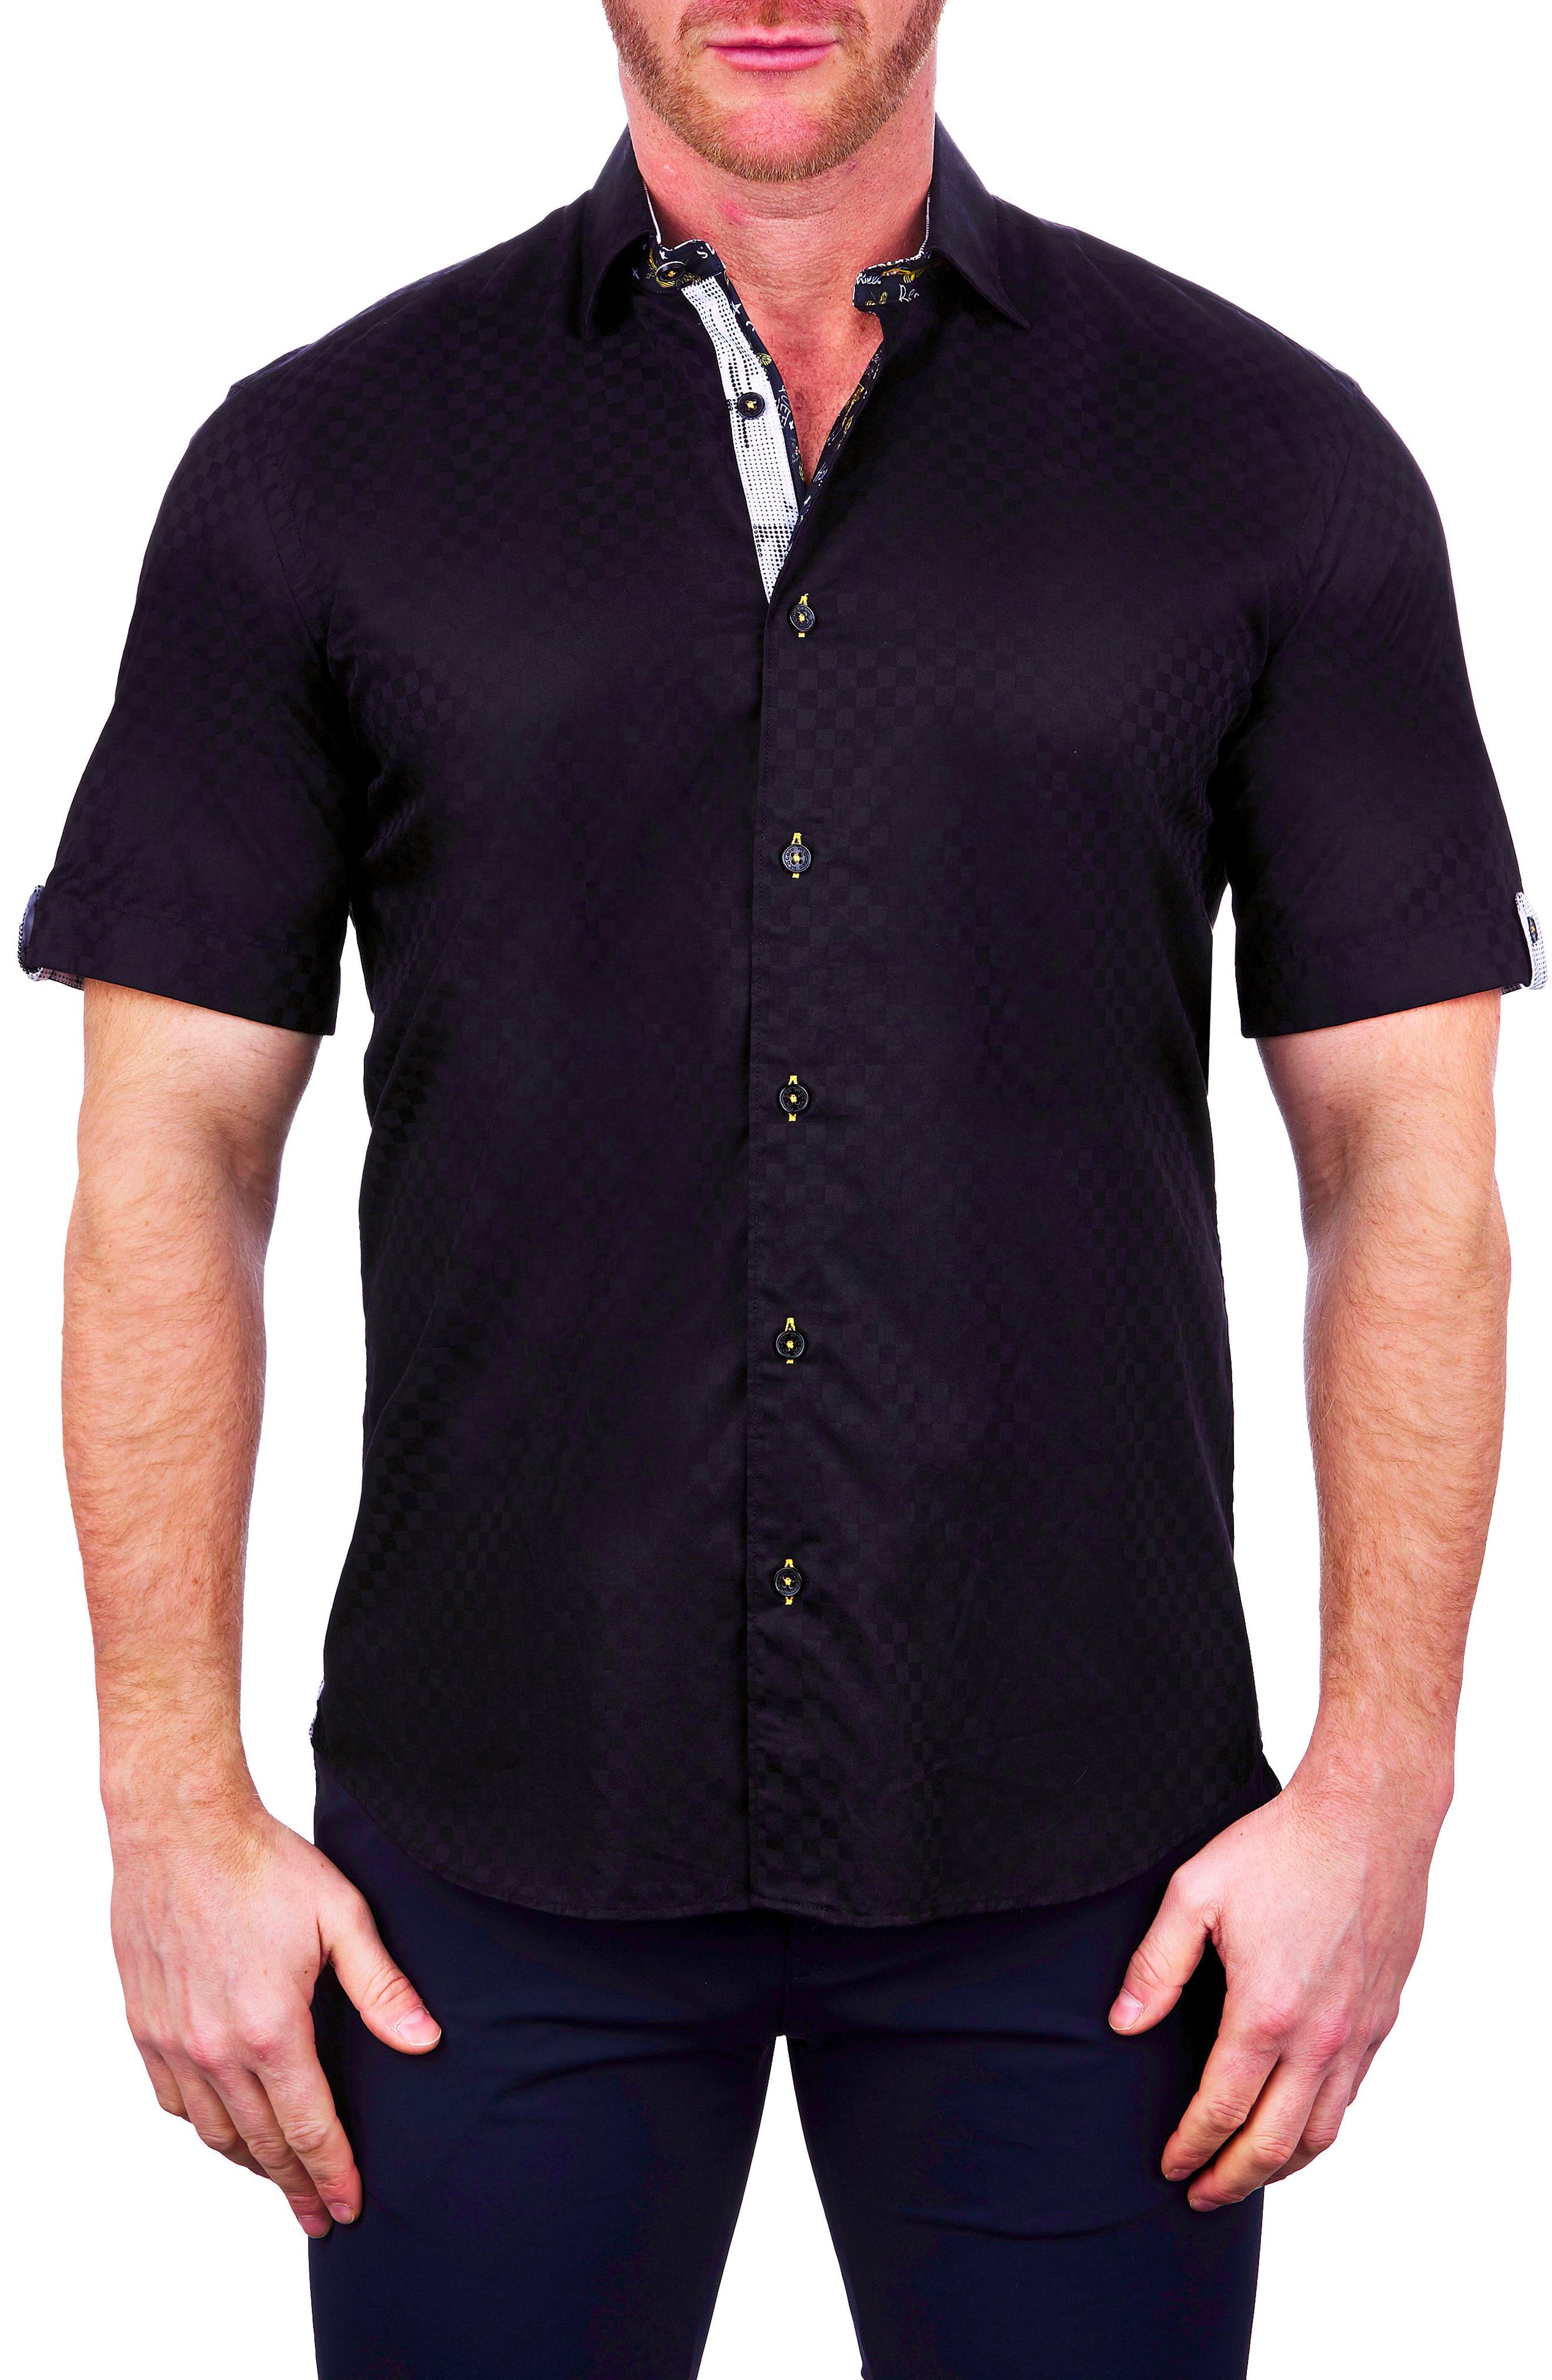 maceoo-cotton-galileo-pepper-black-short-sleeve-button-up-shirt-for-men